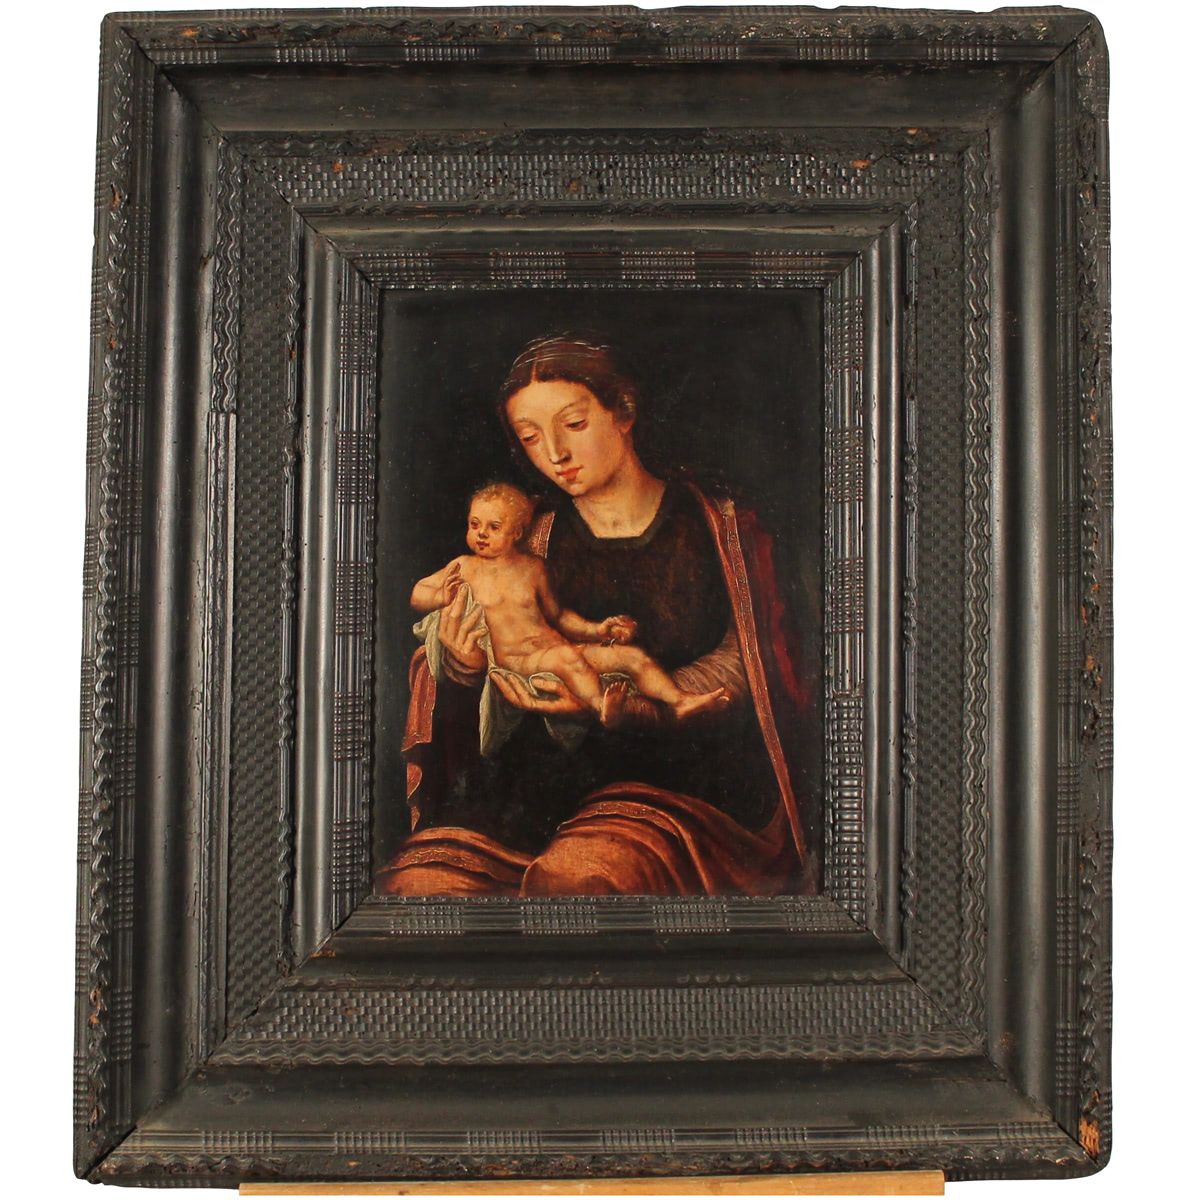 LA MADONNA COL BAMBINO-THE MADONNA WITH THE CHILD 雕花木质画框中的油画。20世纪。Cm 32x42
雕花木框中&hellip;